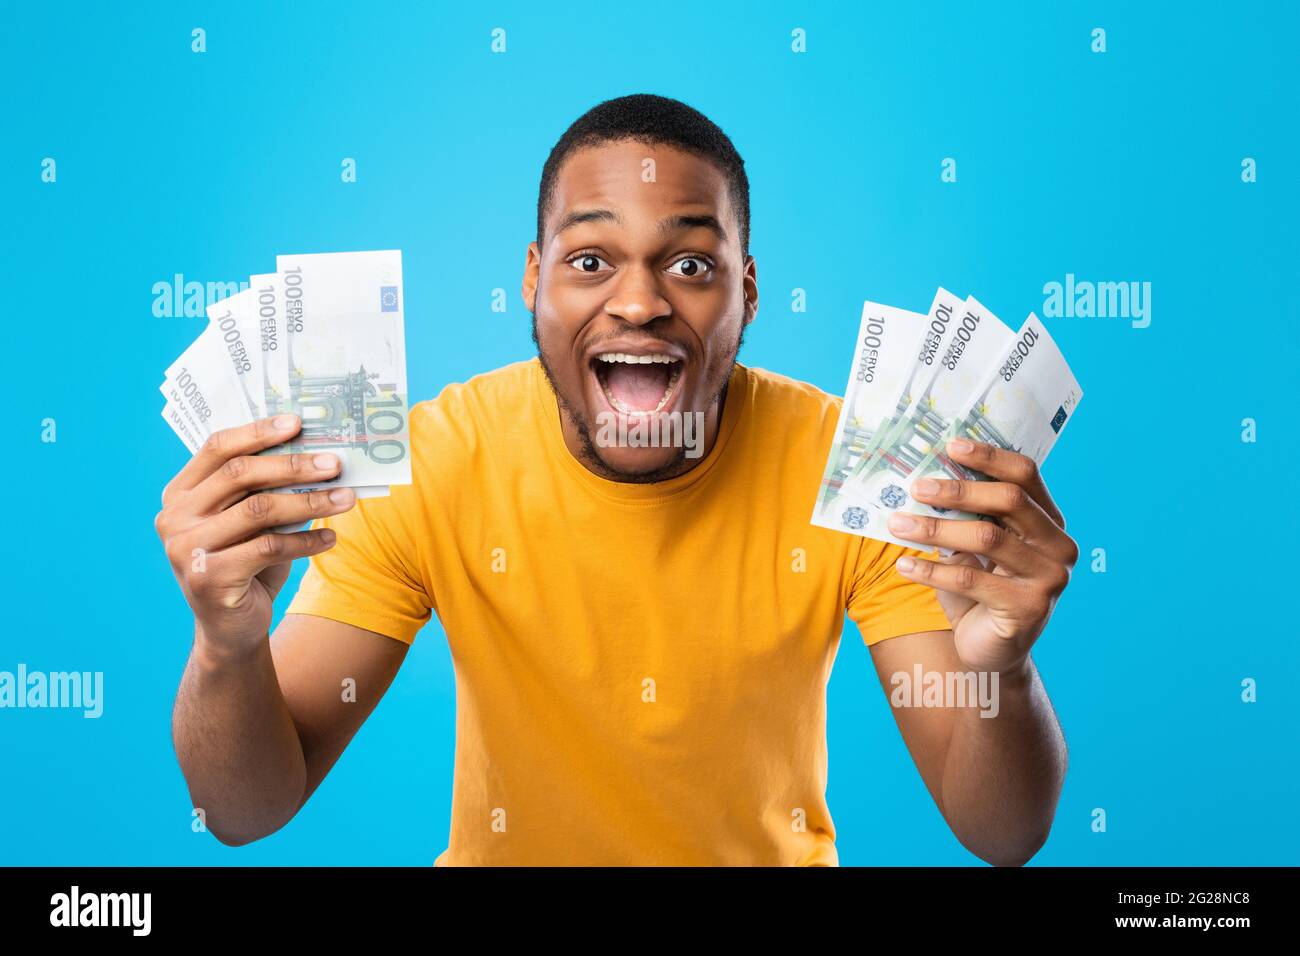 Black Guy Showing Euro Money Shouting In Joy, Blue Background Stock ...